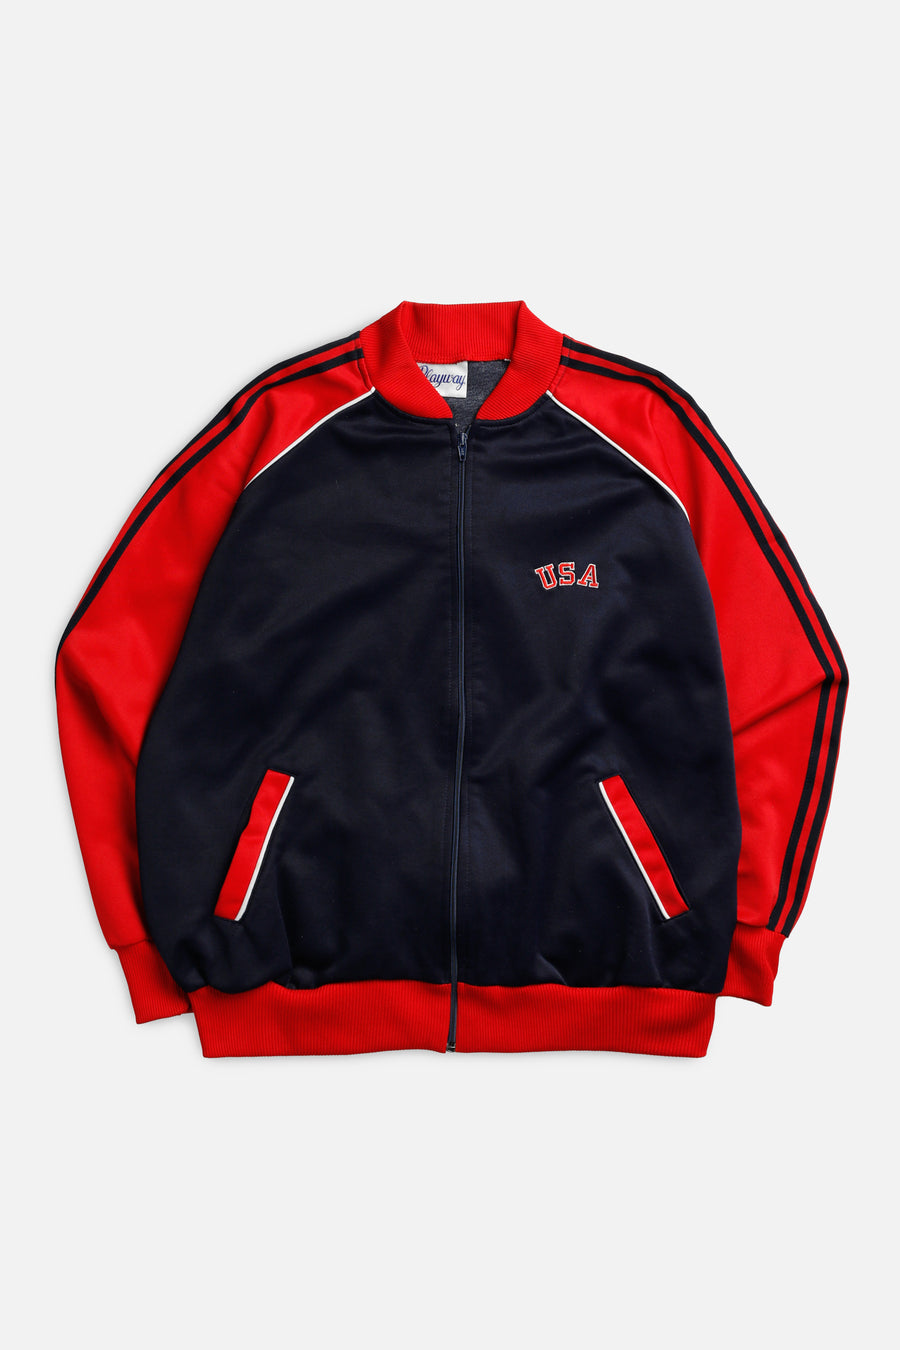 Vintage USA Track Jacket - XL